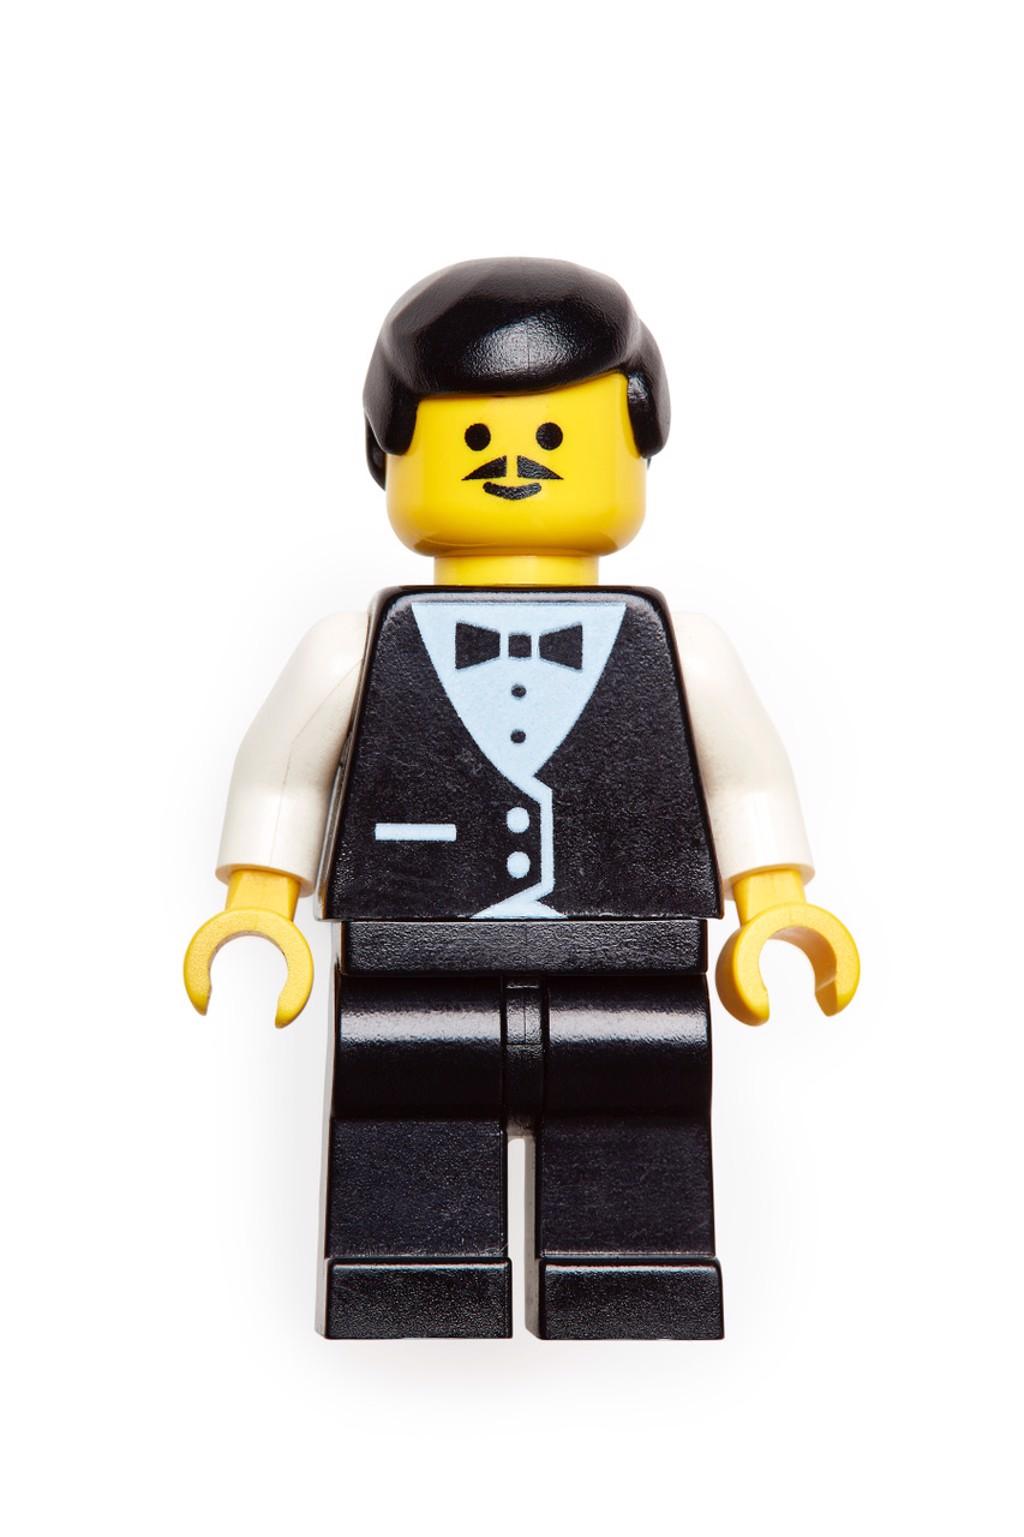 Peter Andrew Lusztyk Figurative Photograph - Lego "Garçon / Waiter" (36" x 24")